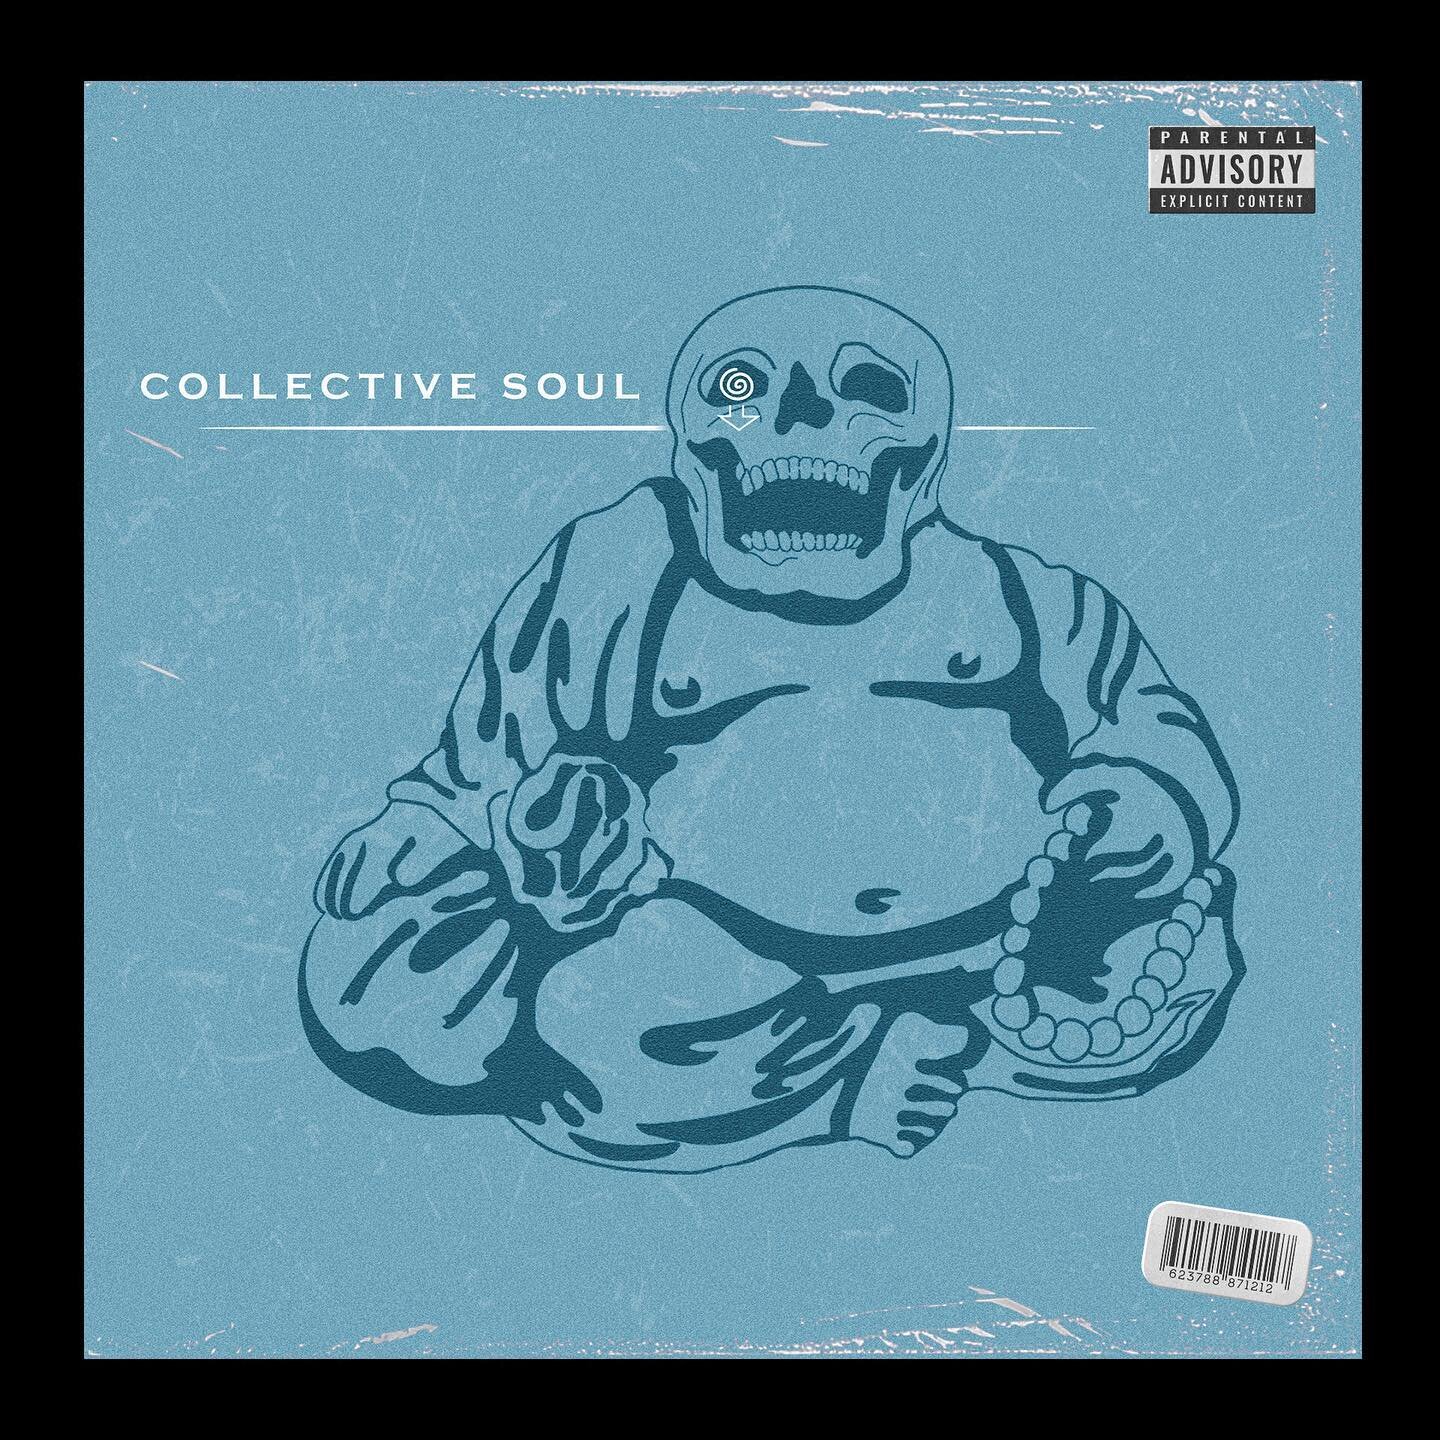 Collective Soul &ldquo;Collective Soul&rdquo; aka &ldquo;Blue Album&rdquo; (1995) Second Studio Album- Album cover redesign. @collectivesoul